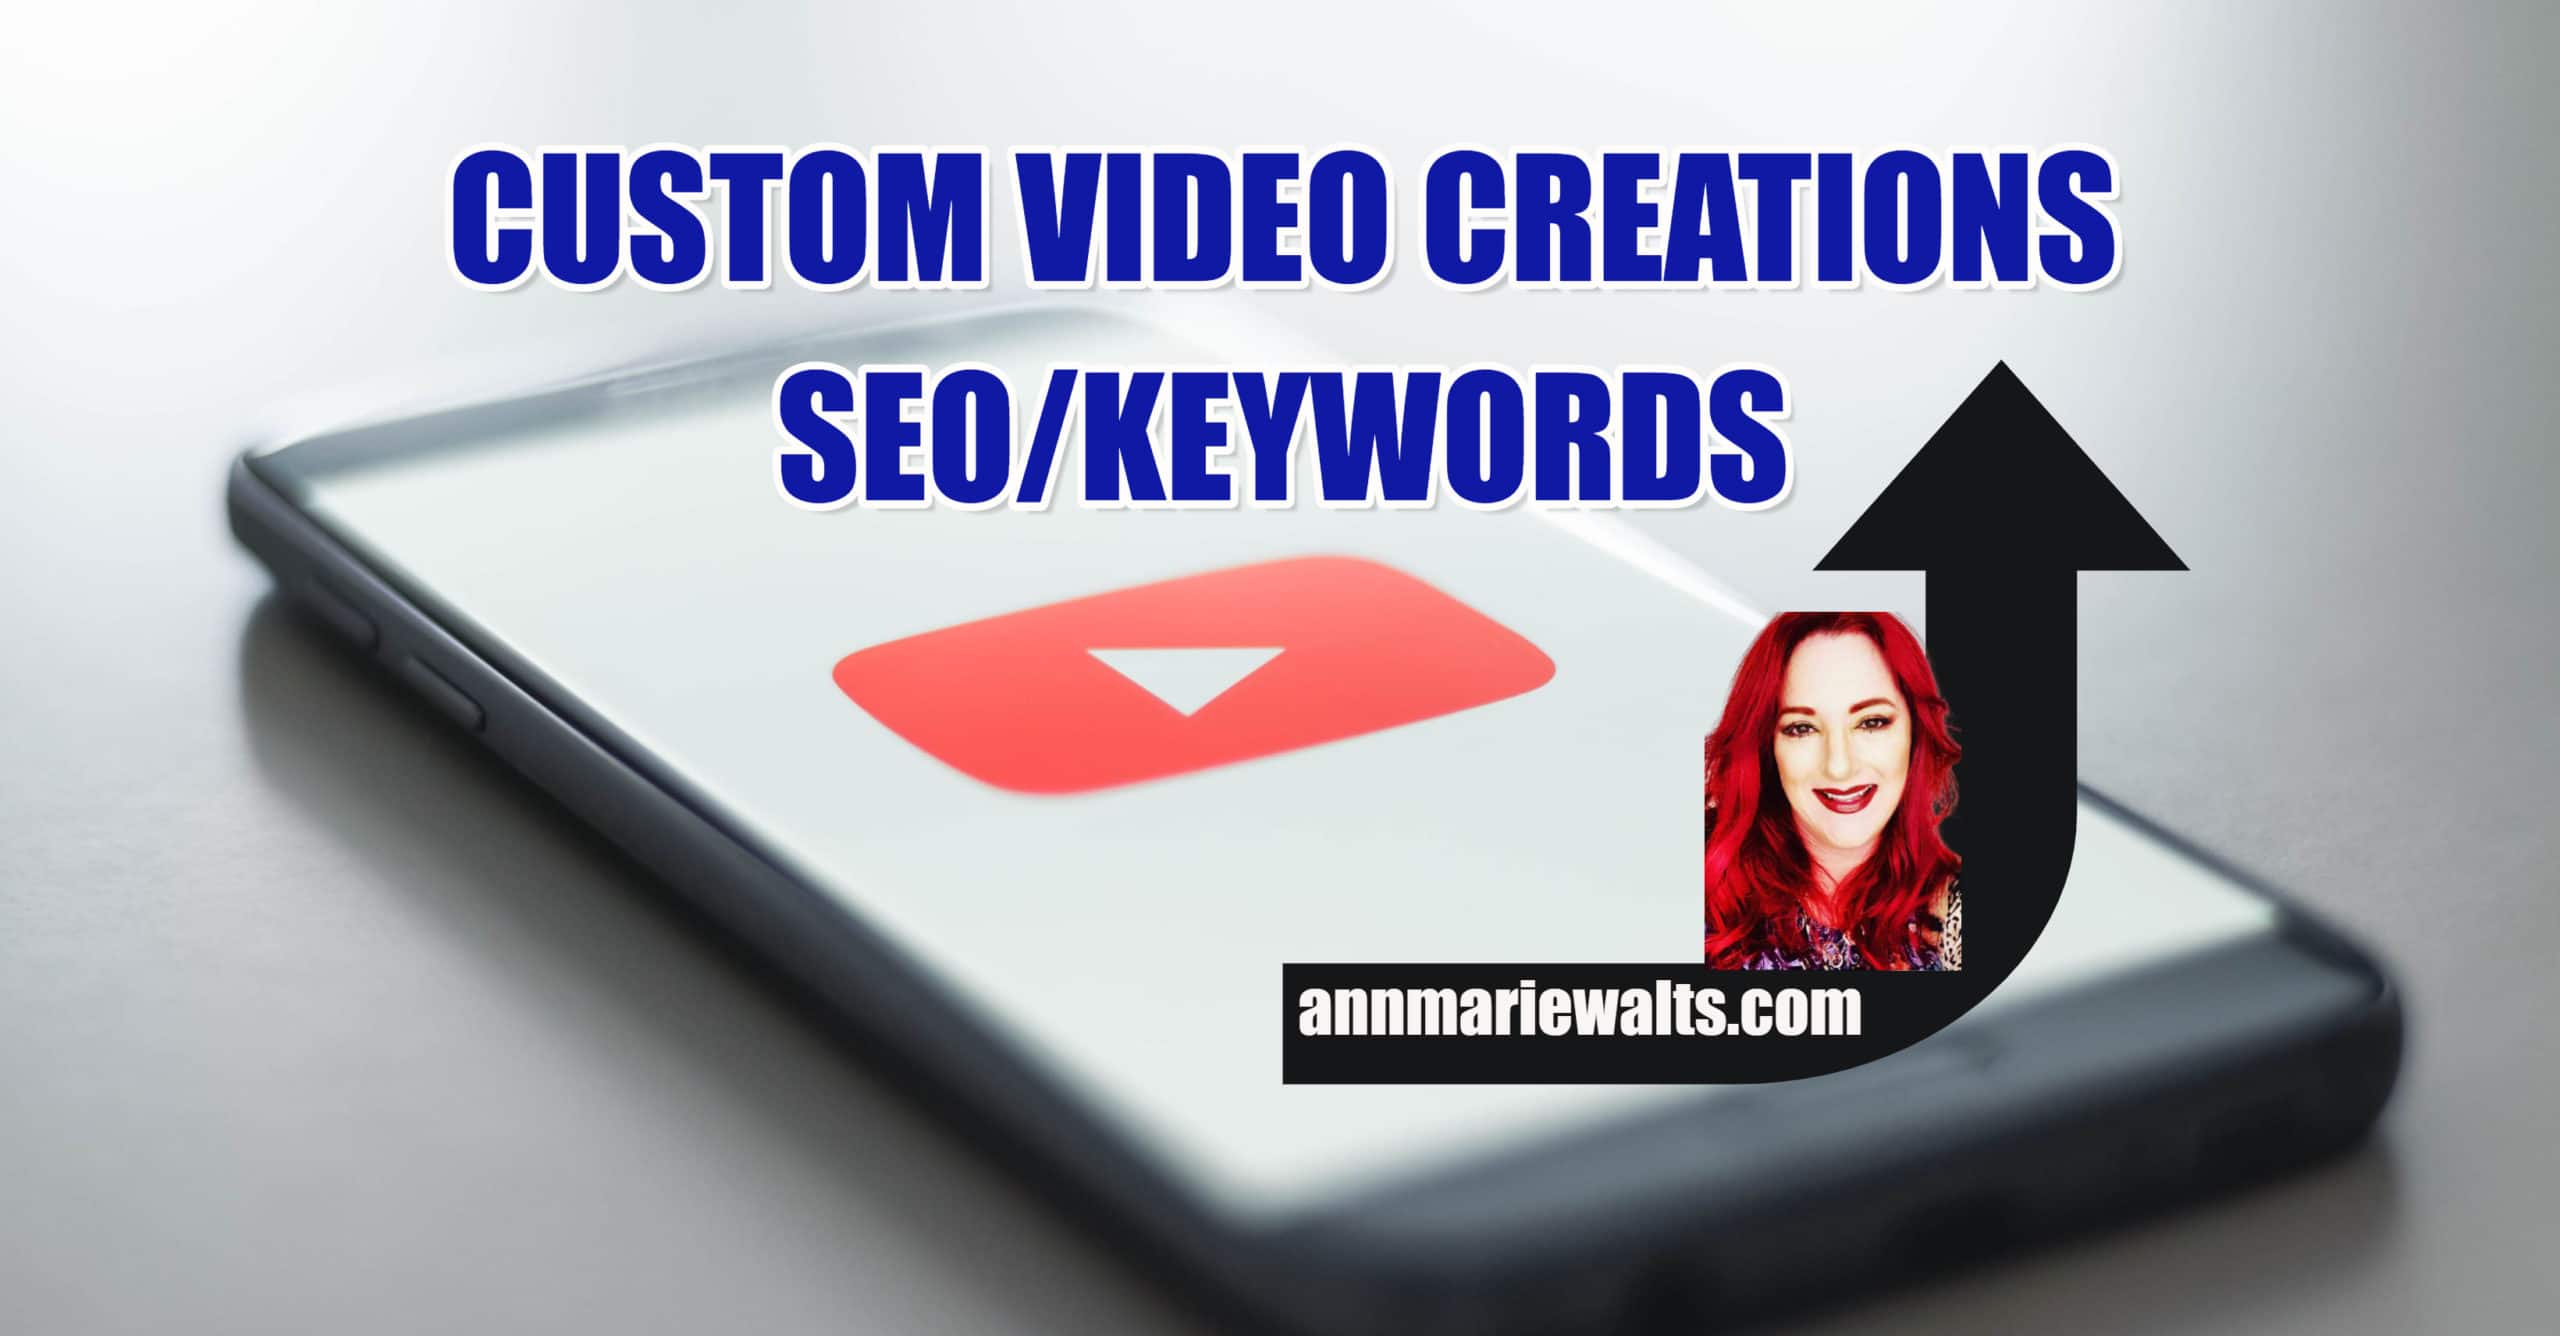 customized video creations seo keywords